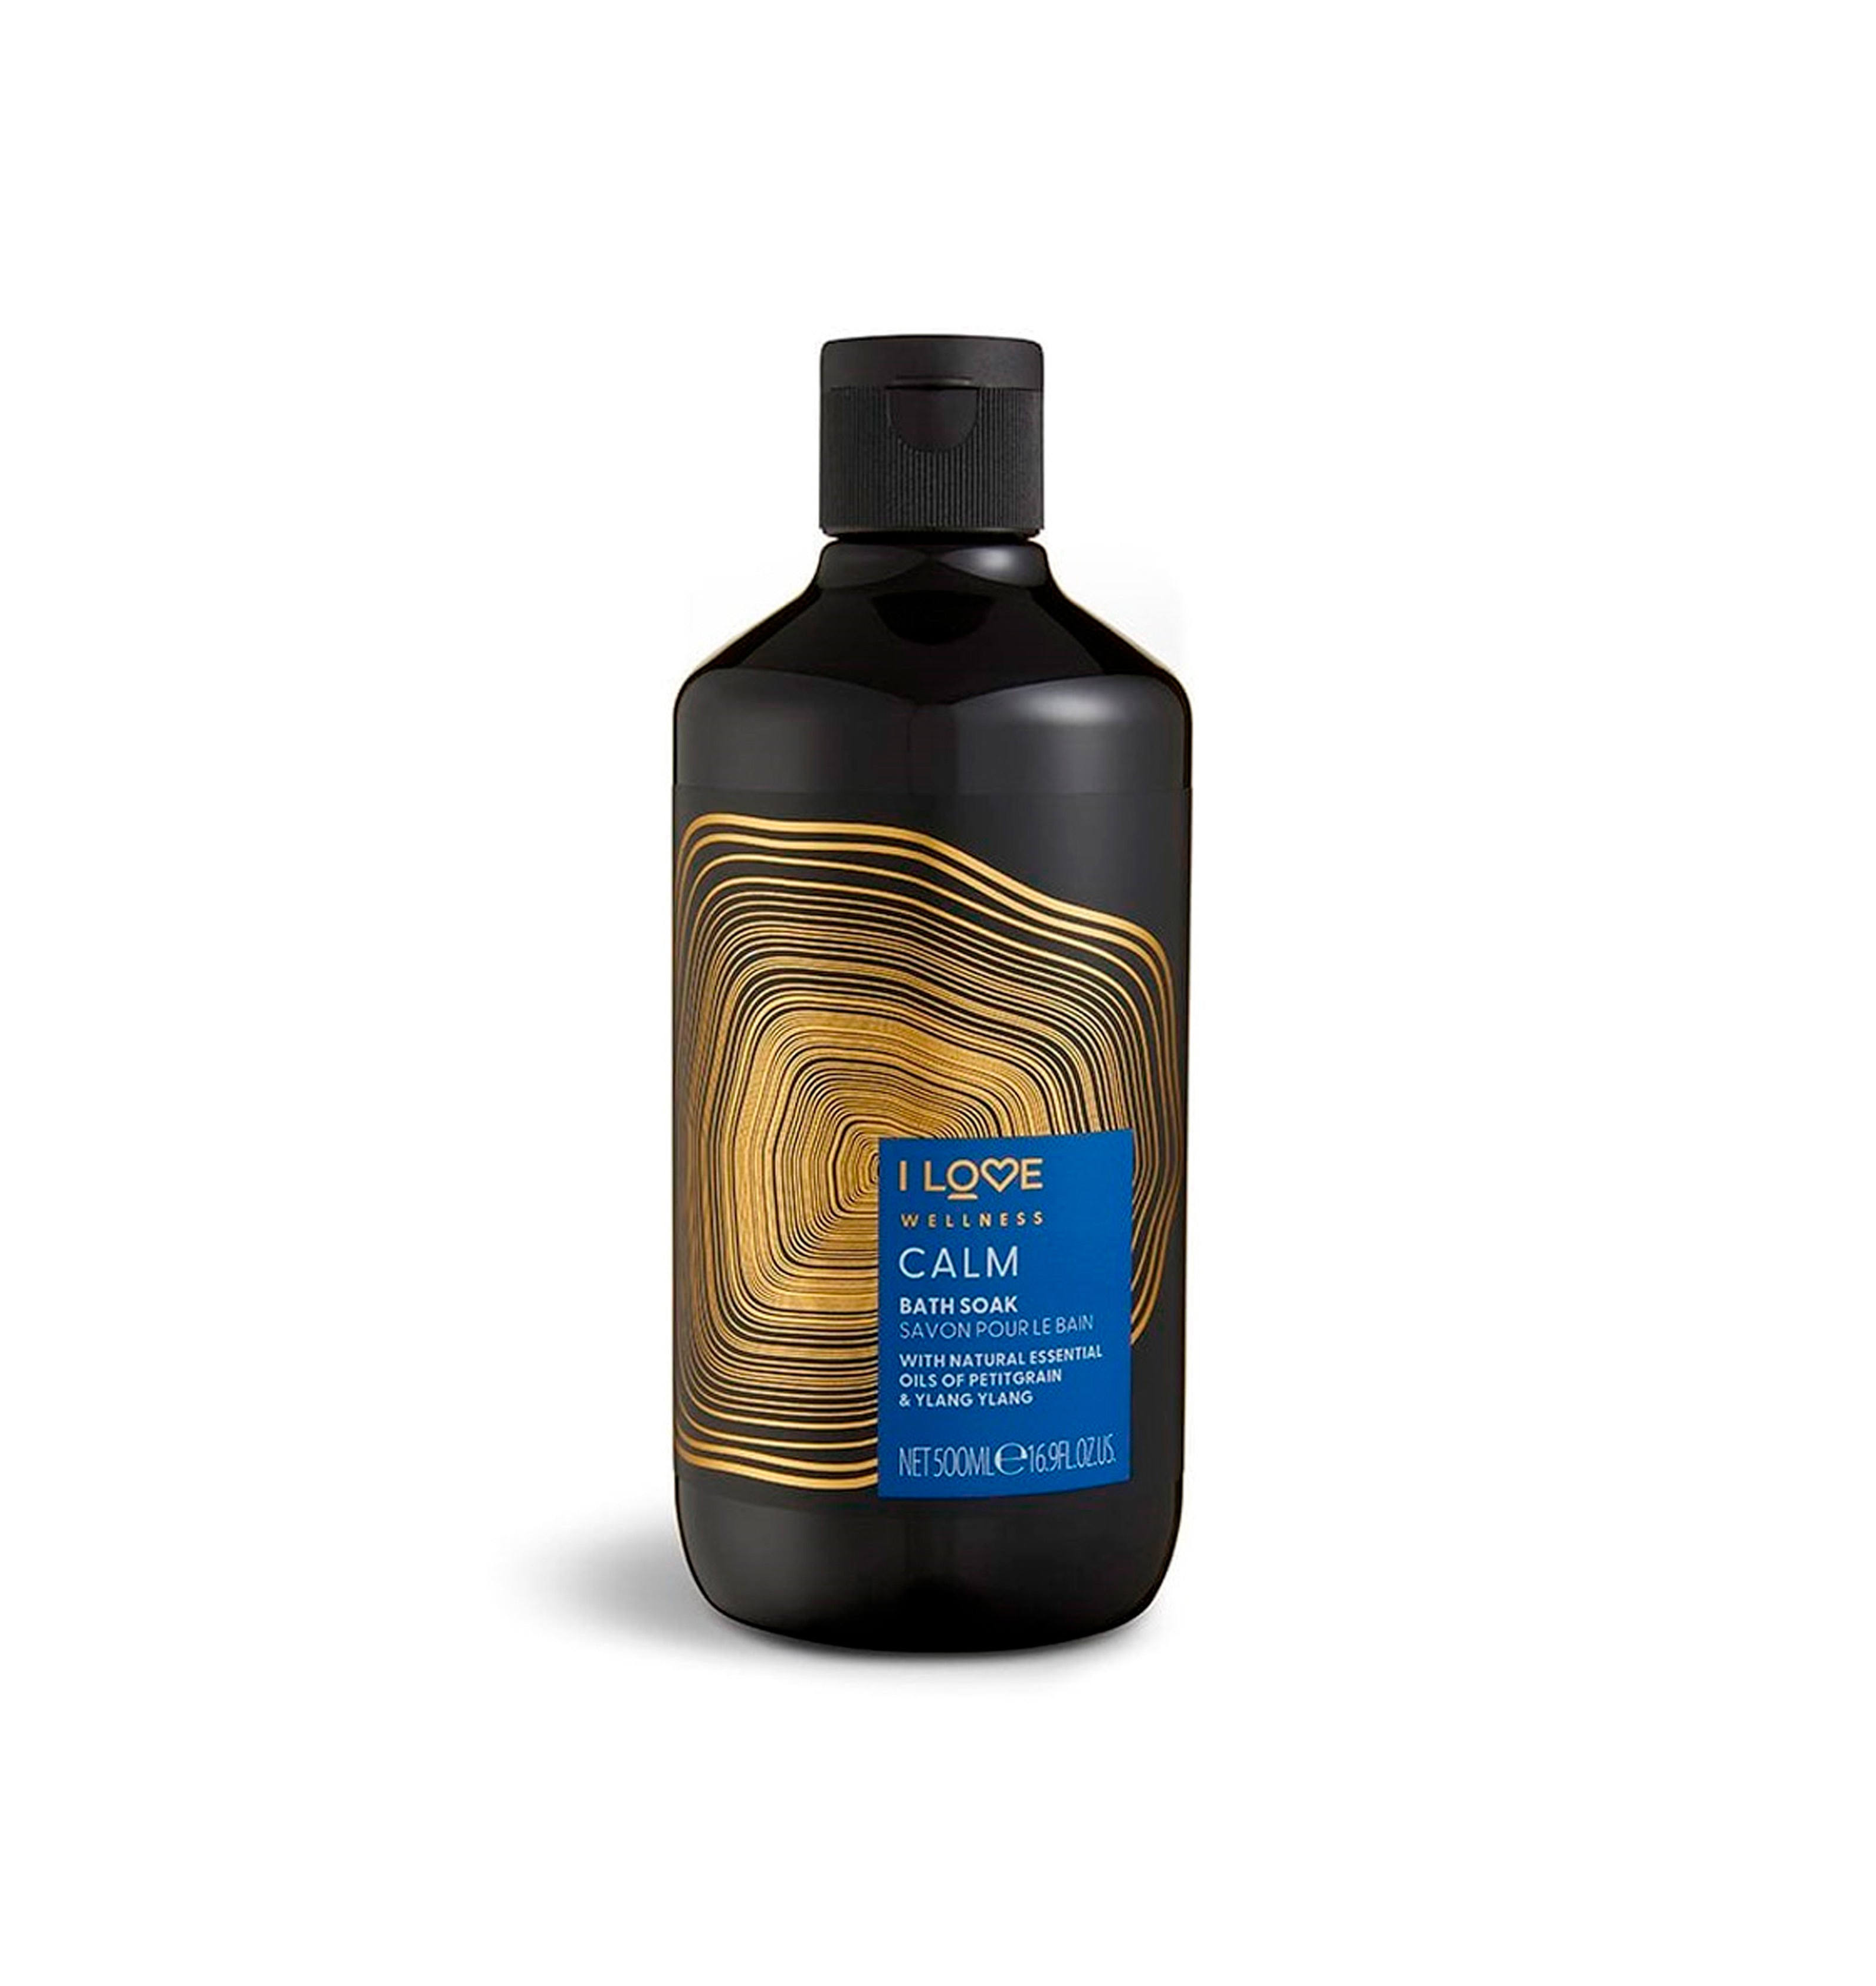 Bath Essential Oil Blend - I Love Wellness Calm Bath Soak